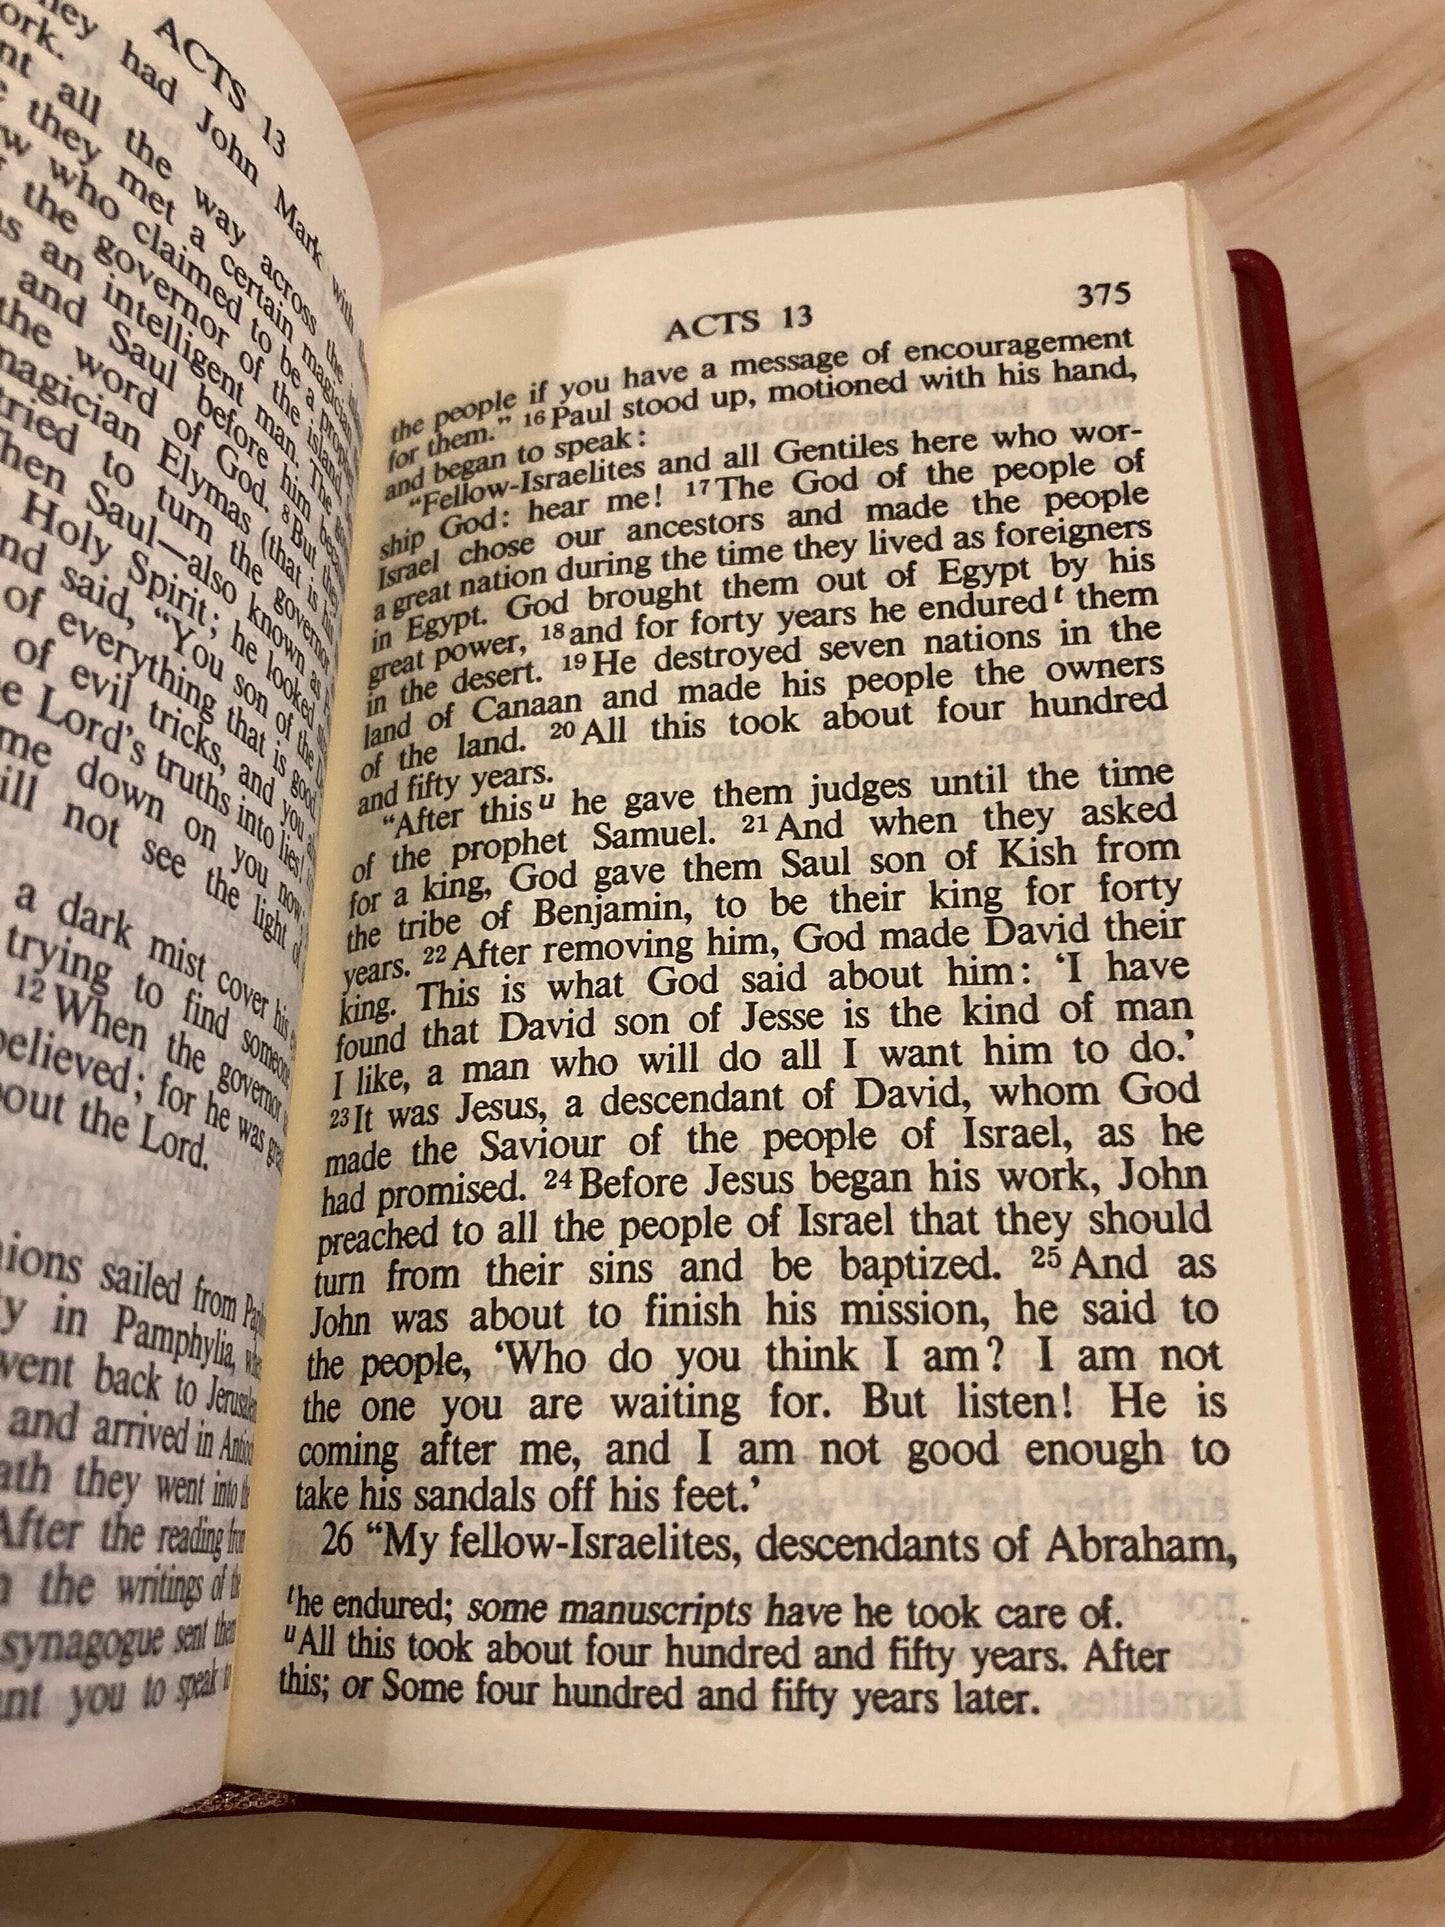 1977 Good News Today’s English Version New Testament Pocket Size - (Ref x212)